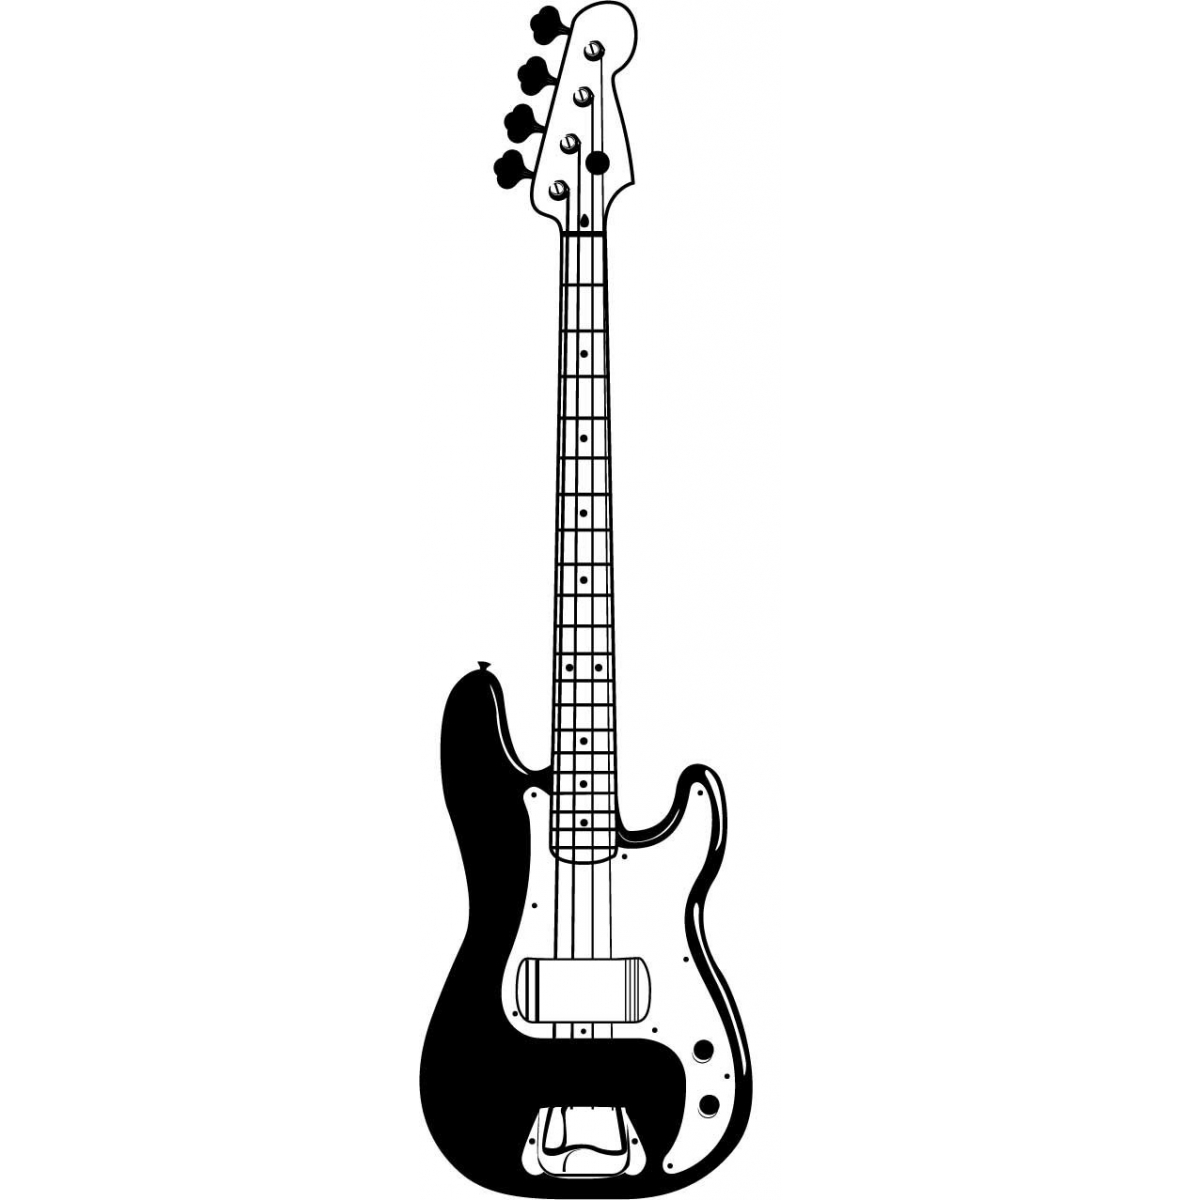 Clipart of bass guitar outline 